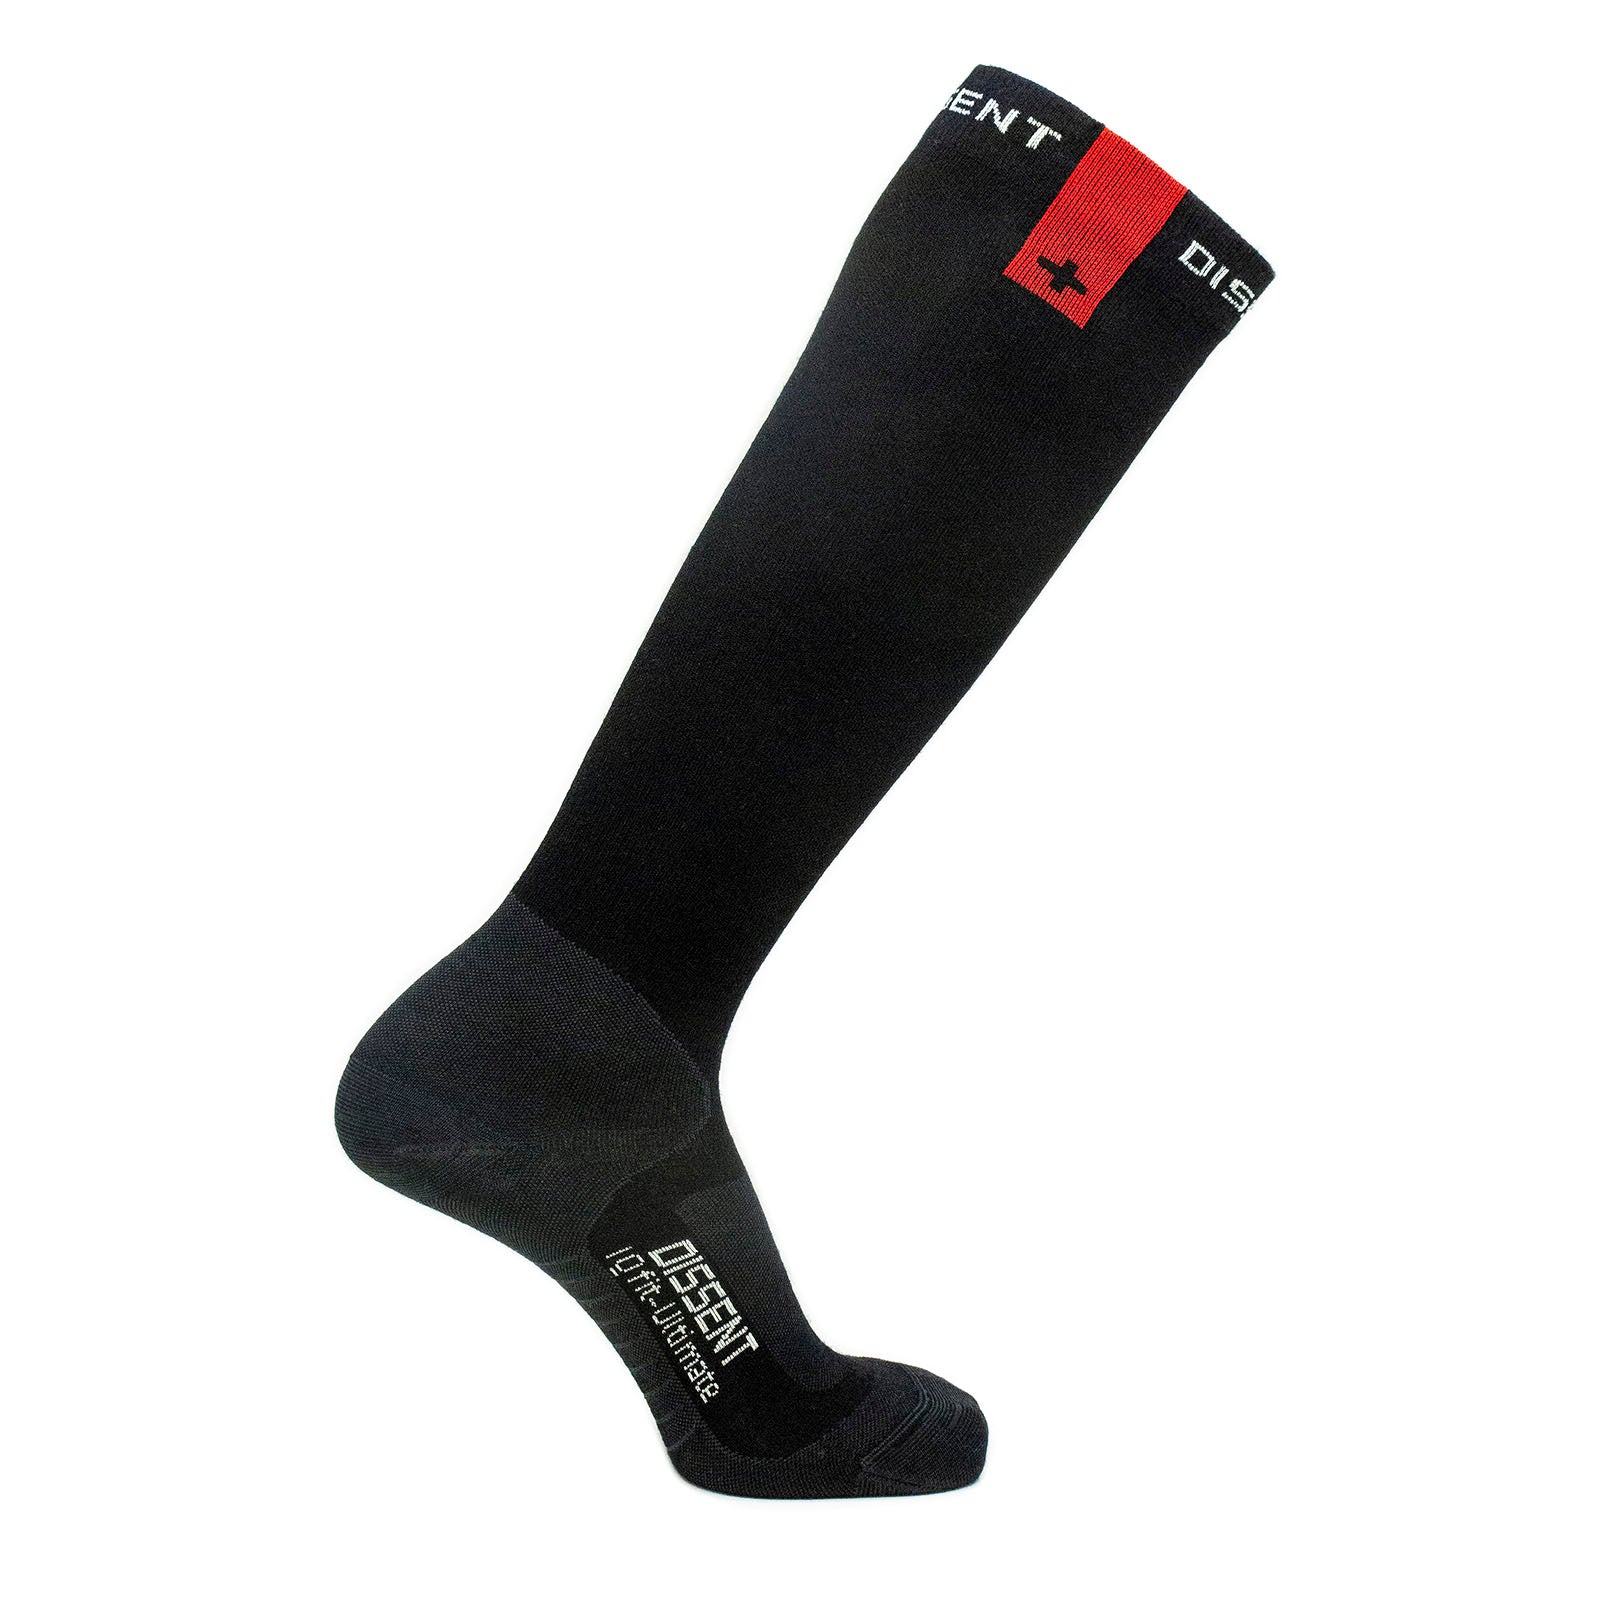 Dissent IQ Fit Ultimate Ski Sock - Ultra thin + Light Merino Warmth -  DISSENTLABS